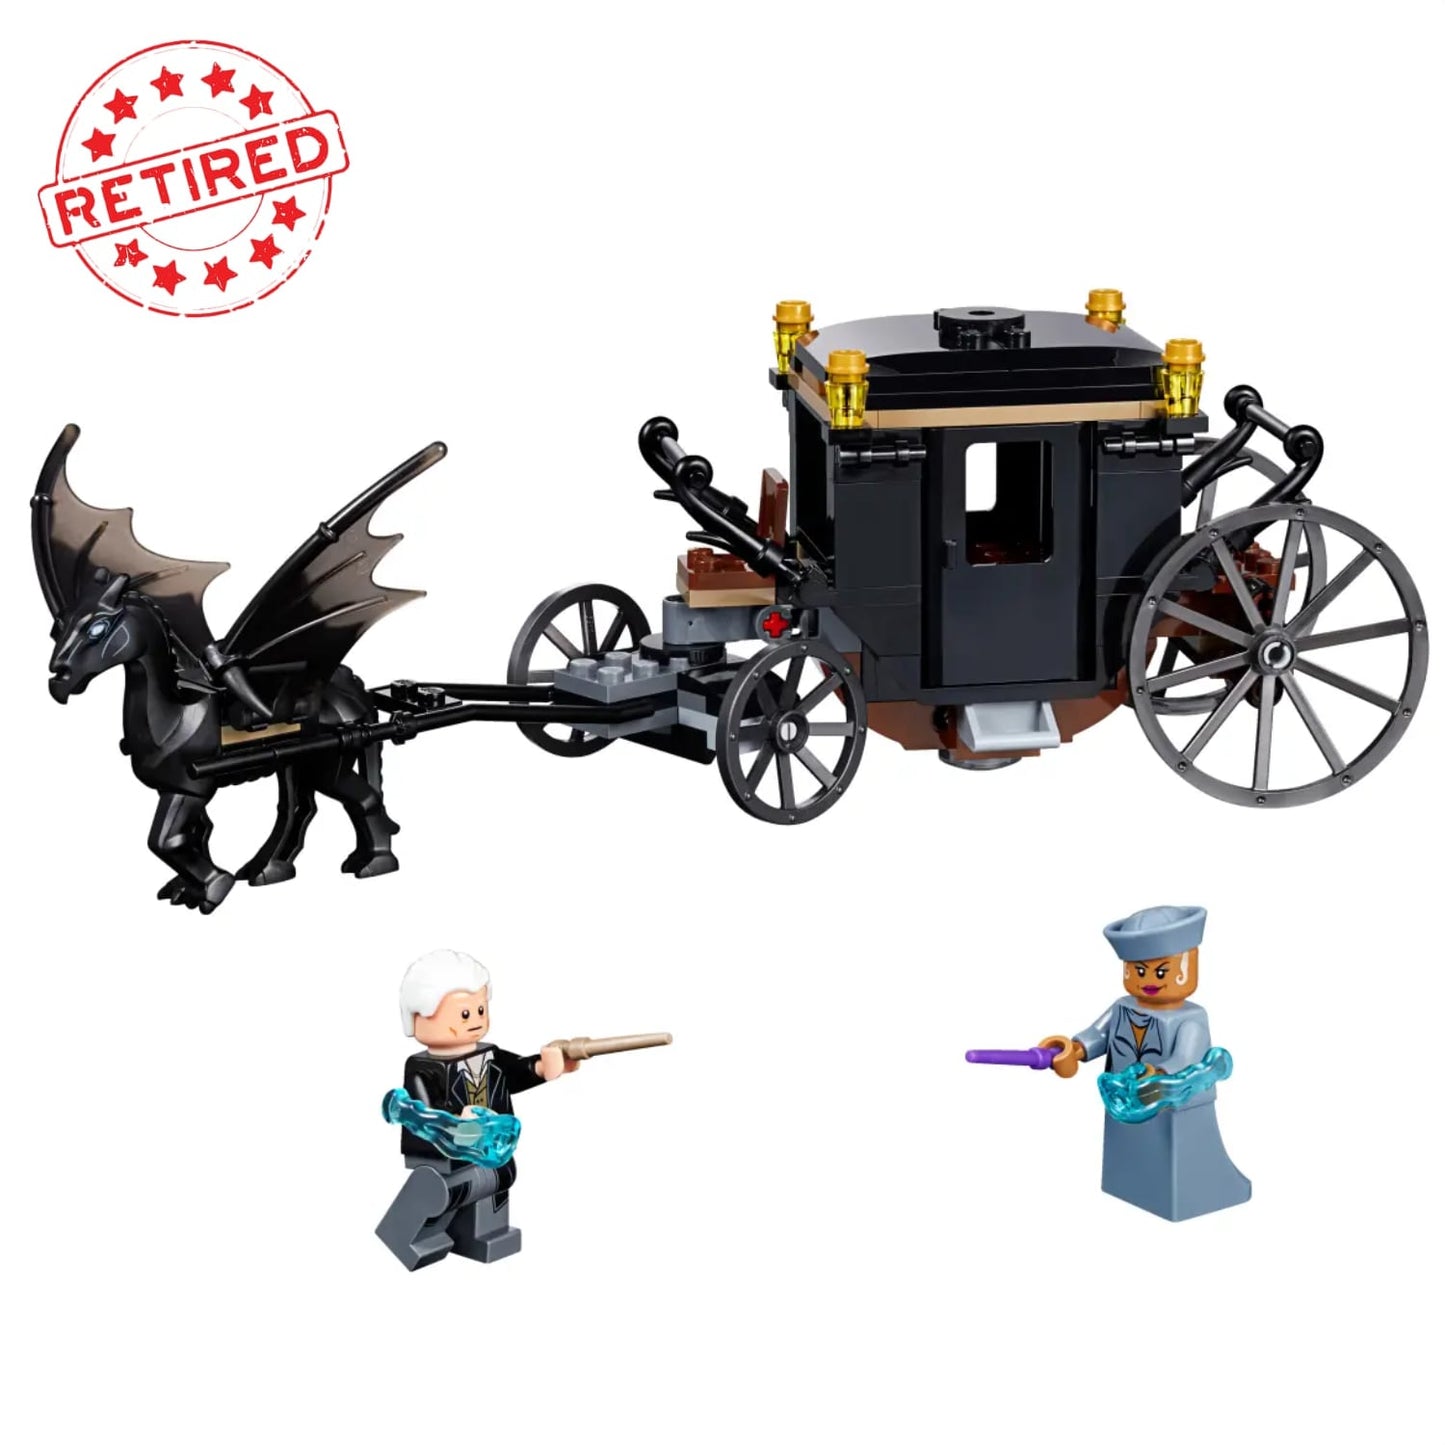 Lego 75951 Fantastic Beasts Grindelwald´s Escape